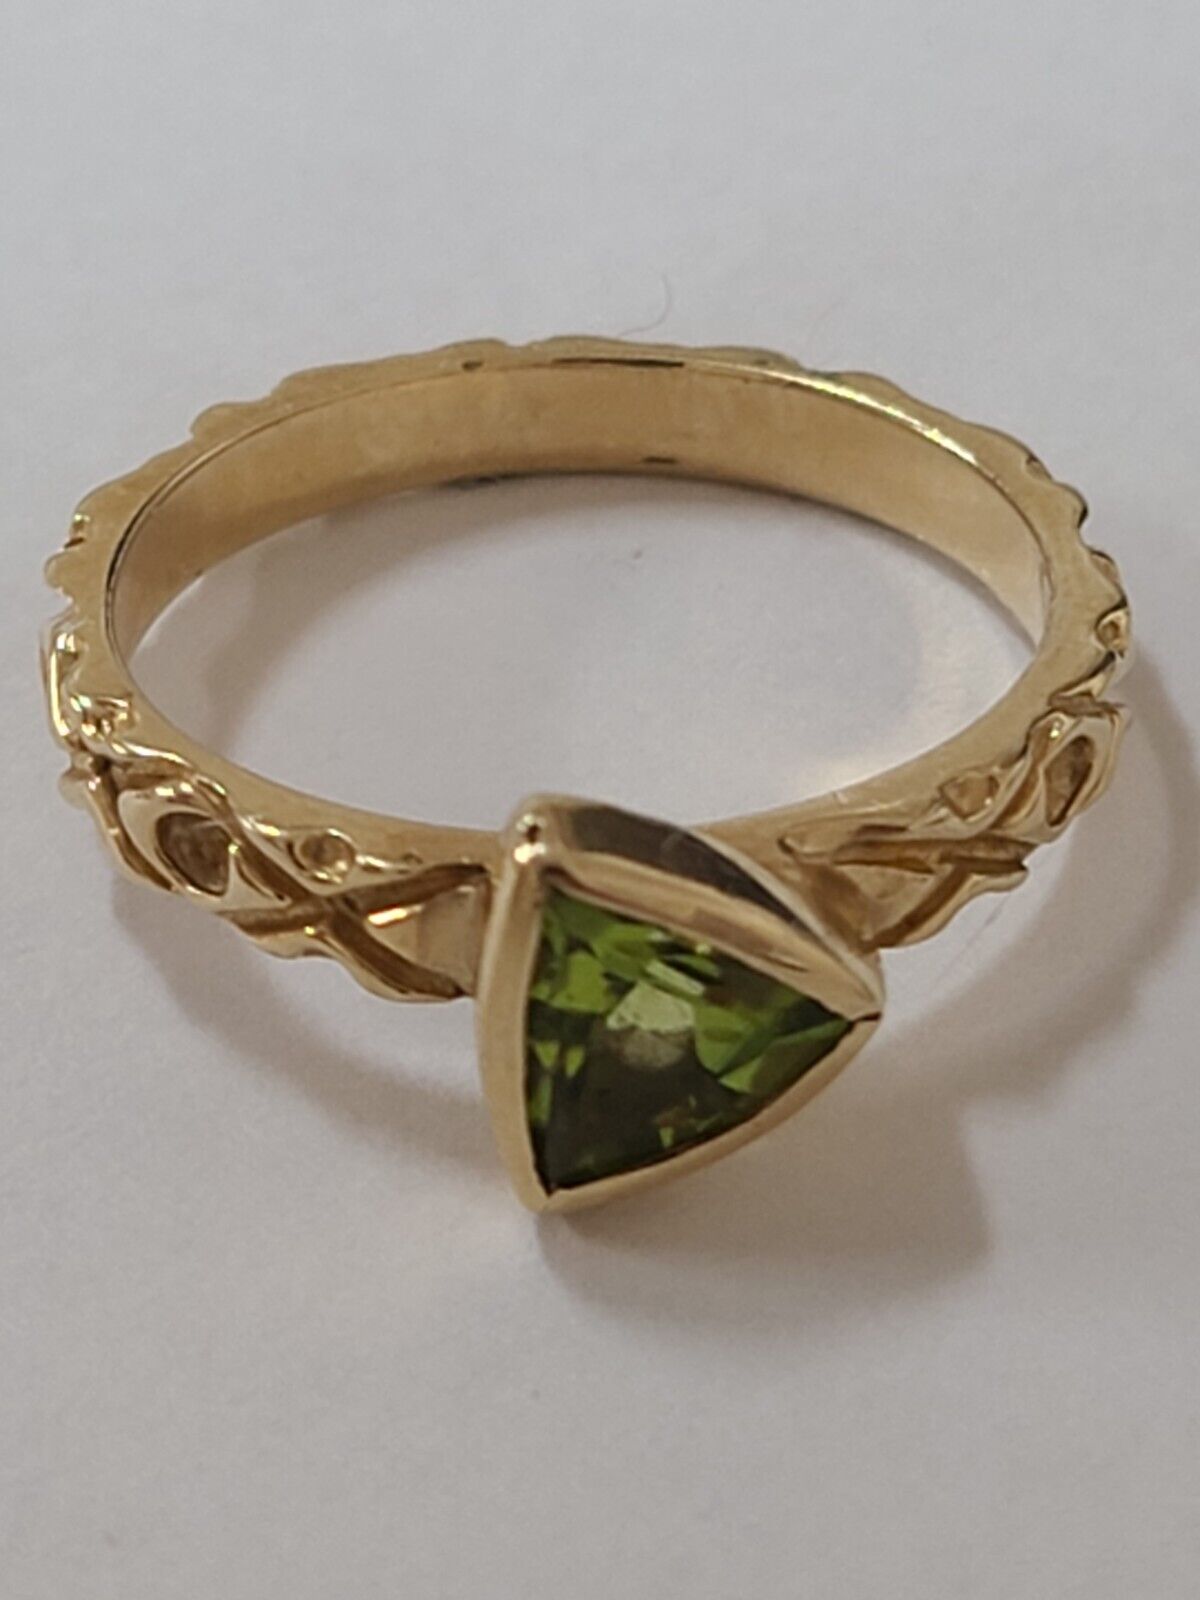 Vintage Triangle Peridot Ring 14k Yellow Gold Diamond Cut Design Size 6.5